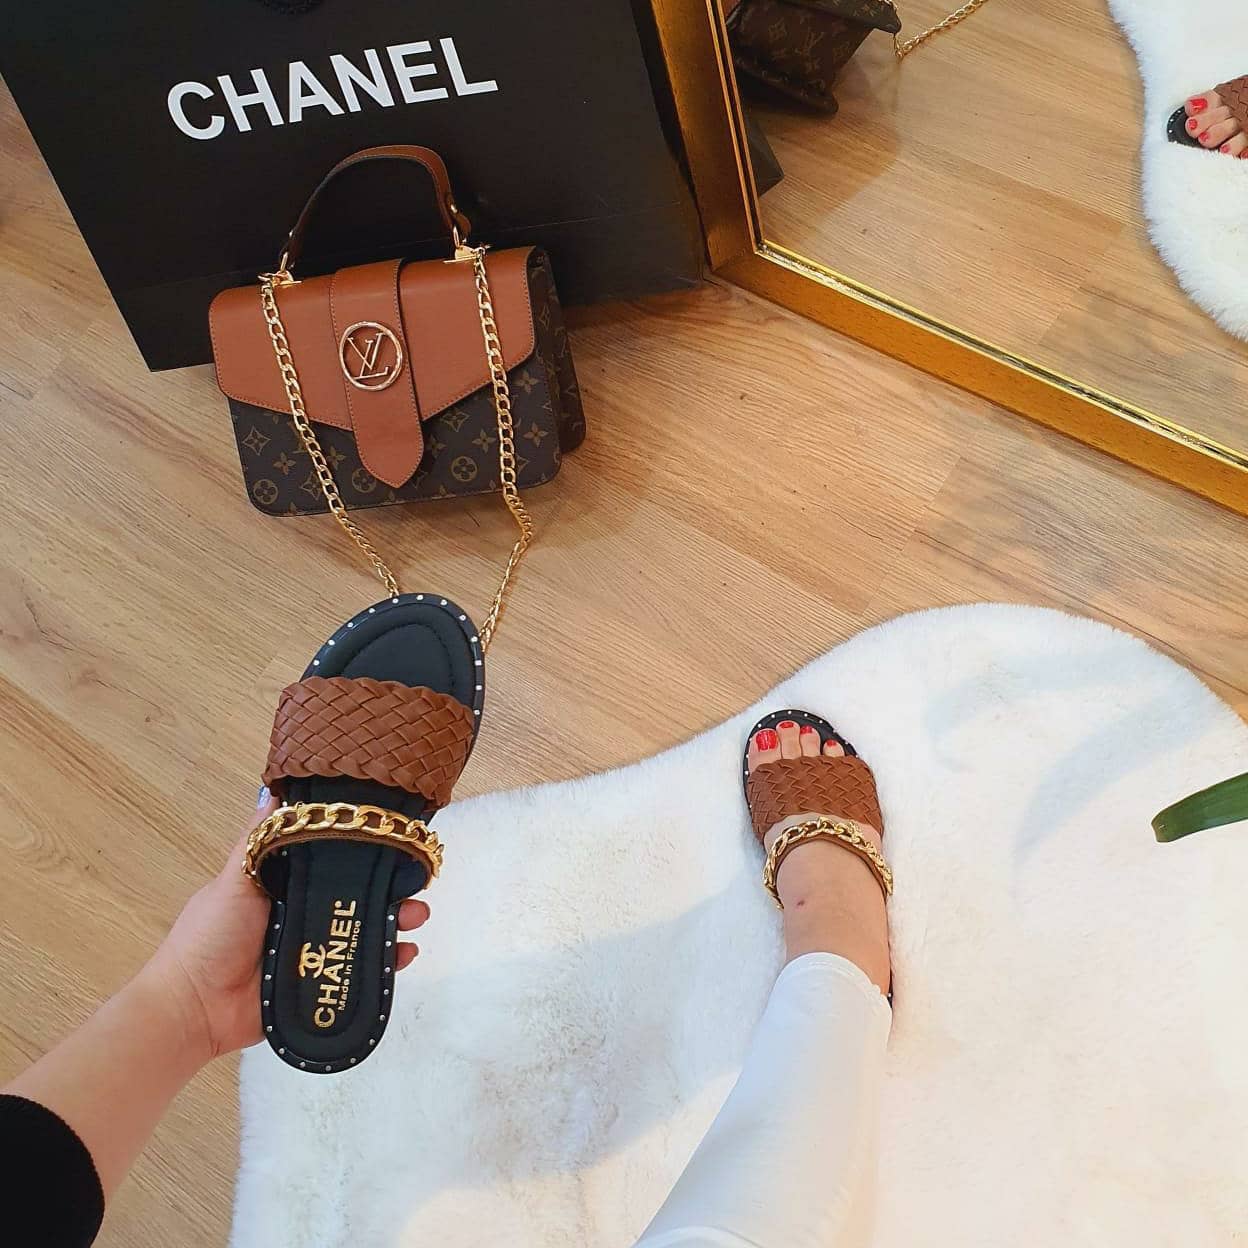 Chanel summer flip-flops